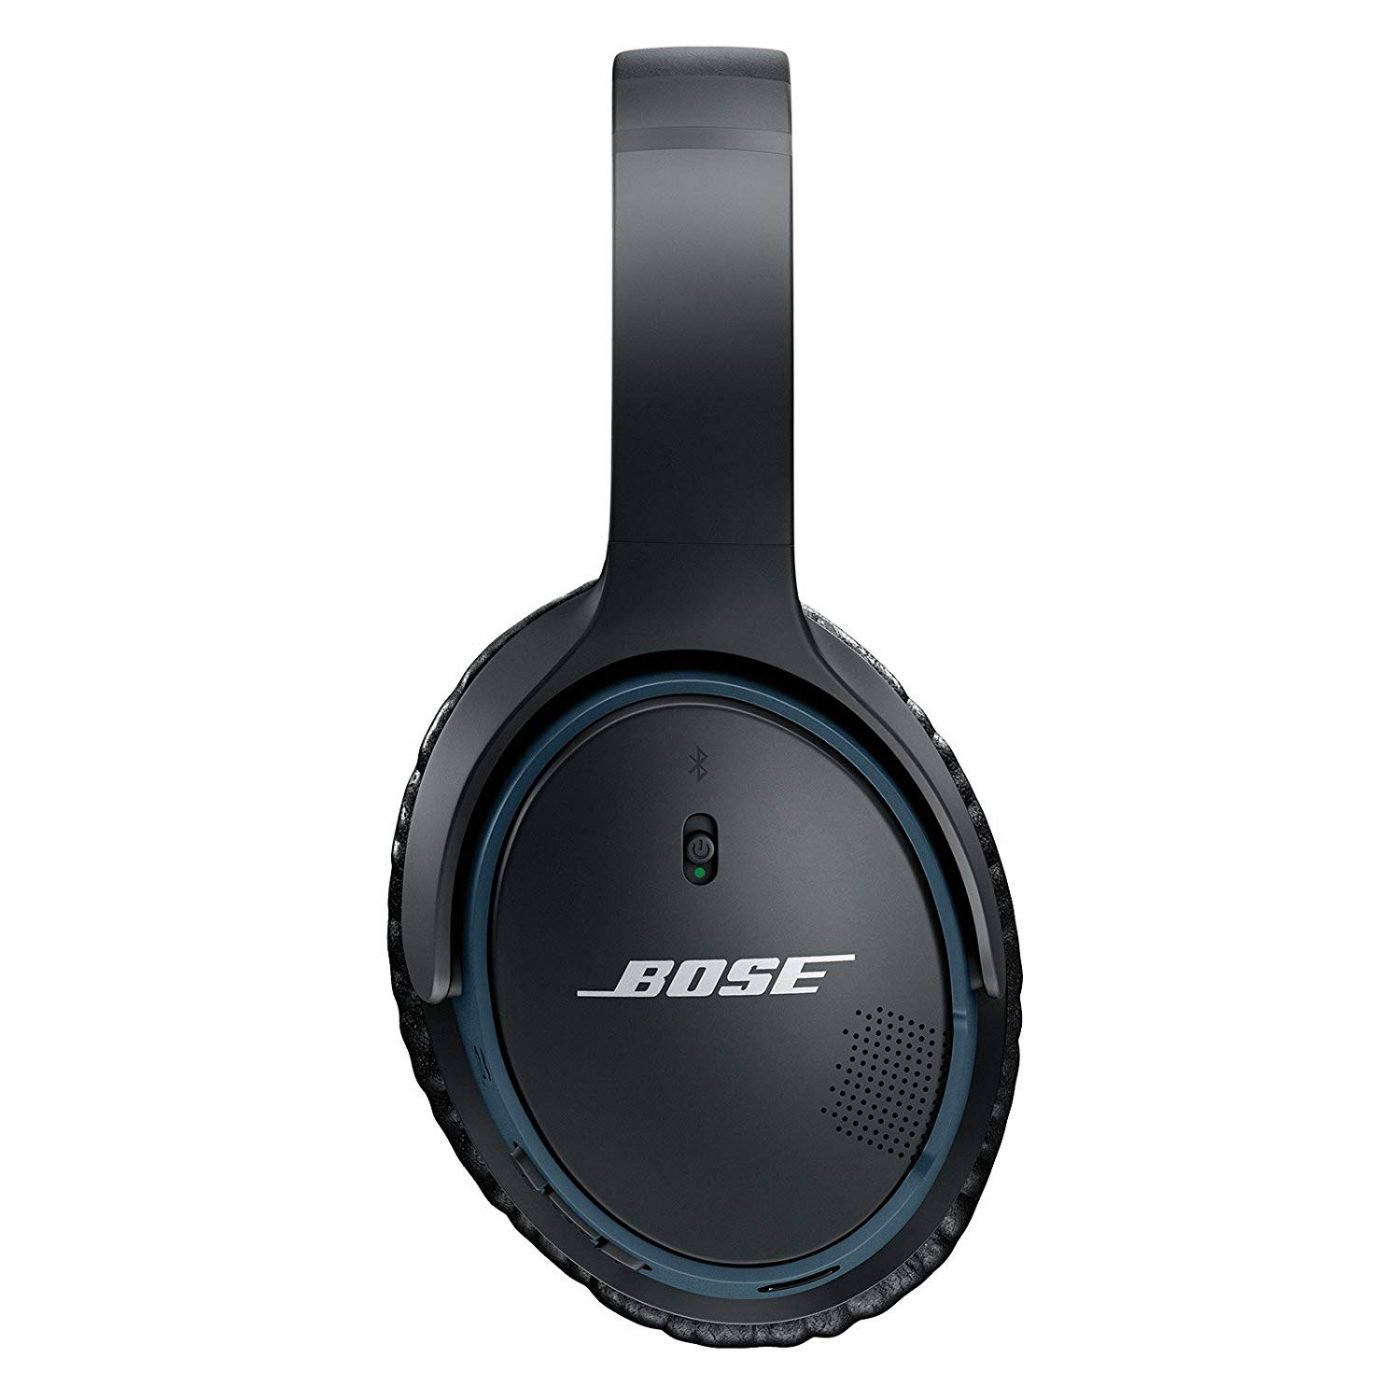 Bose soundlink wireless headphones